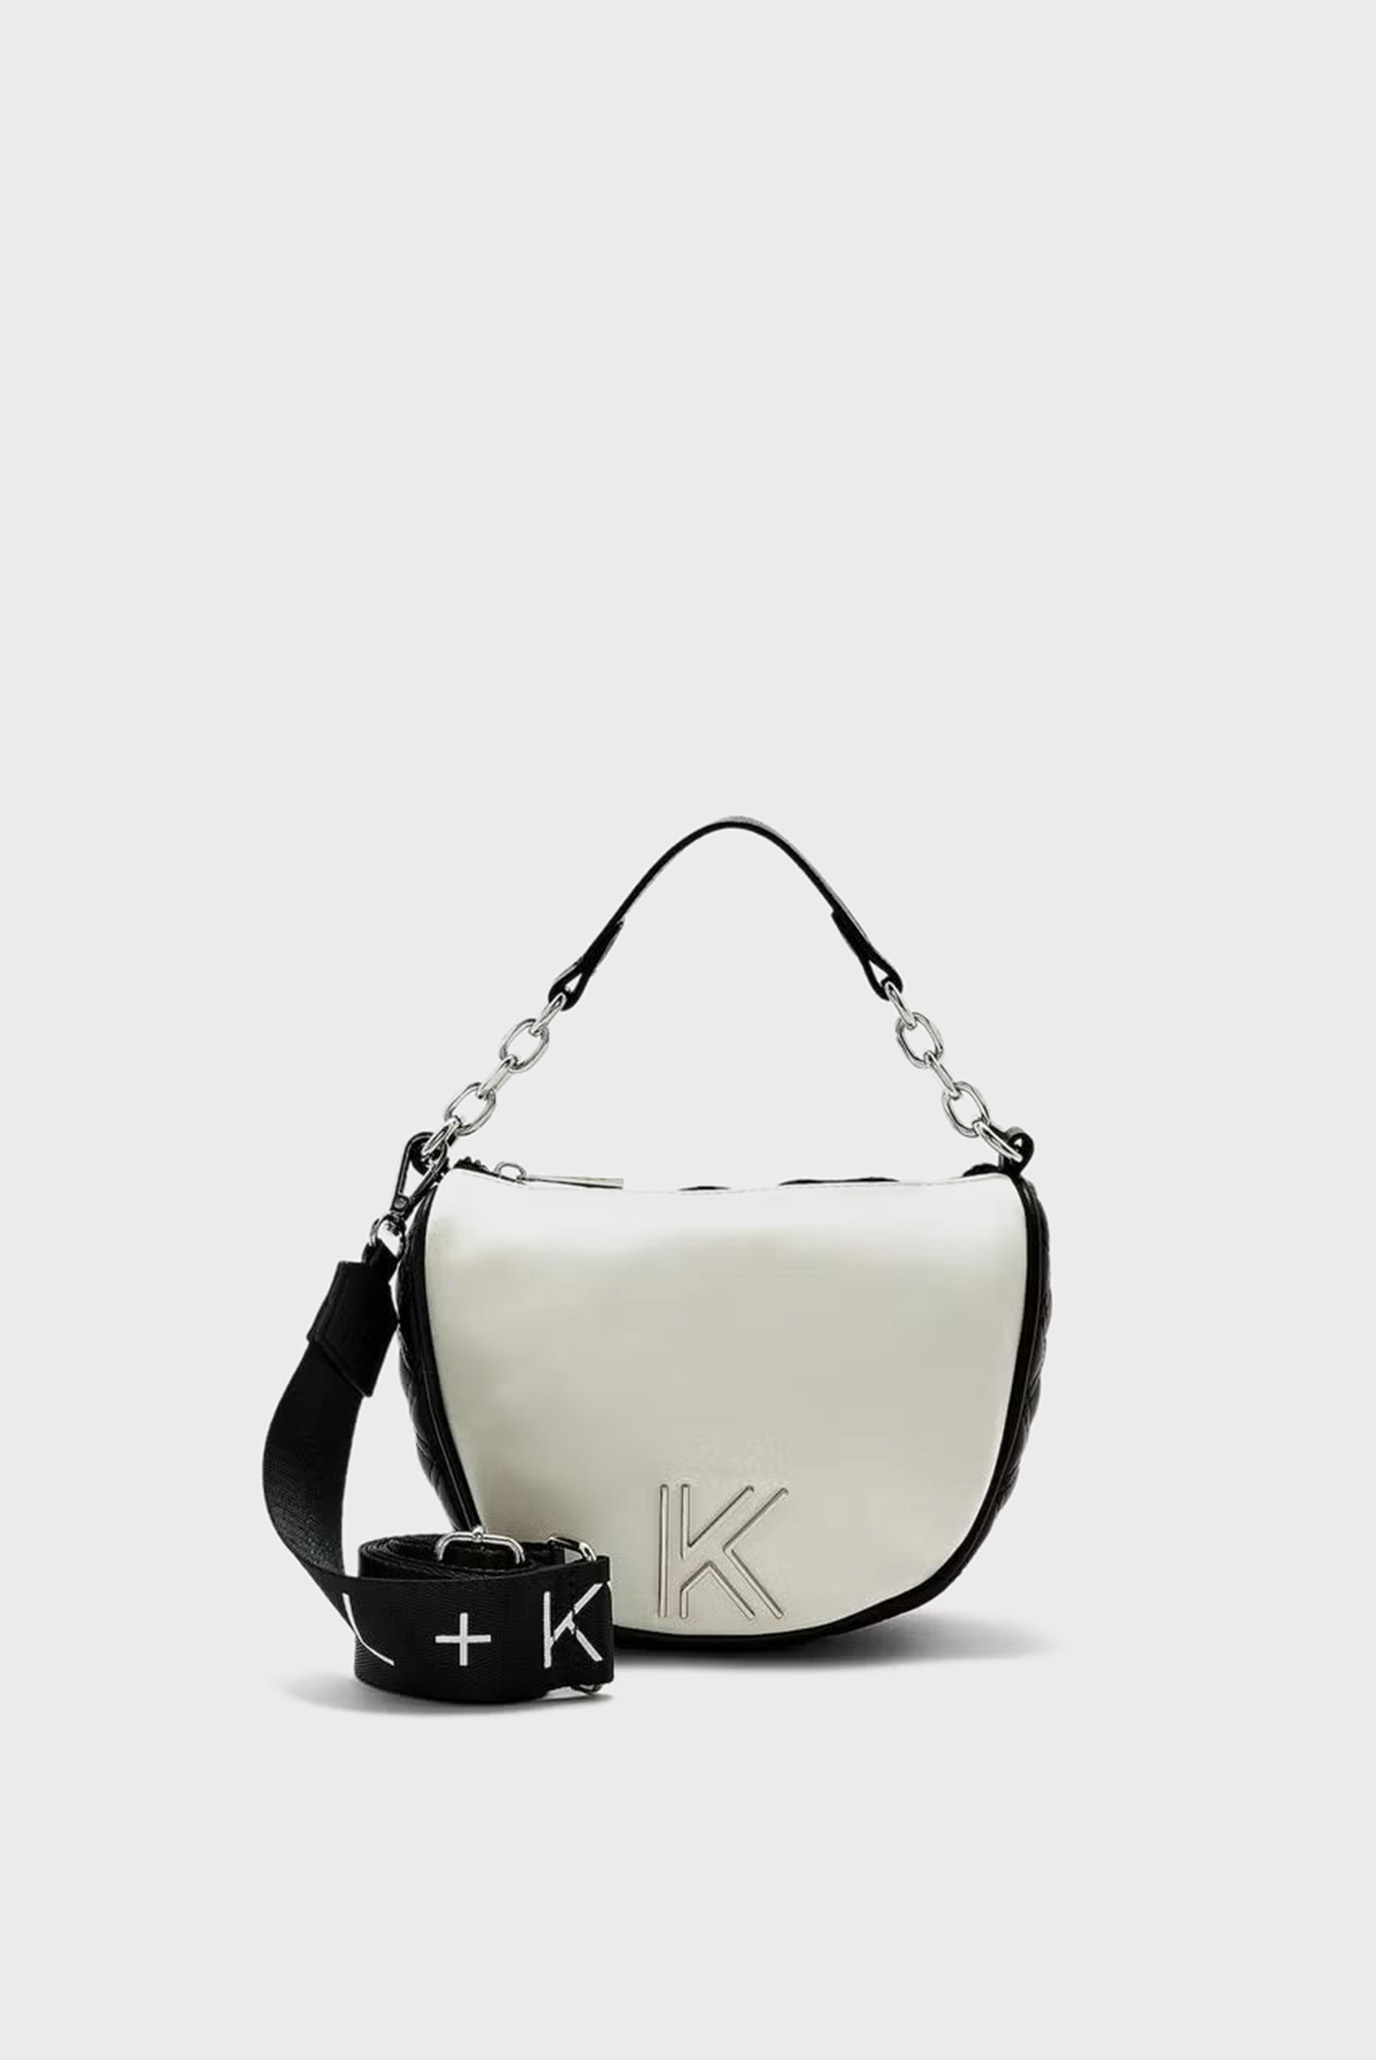 Сумка/K&K BAGS CROSSBODY - WHITE * HBKK-123-00021-1 1